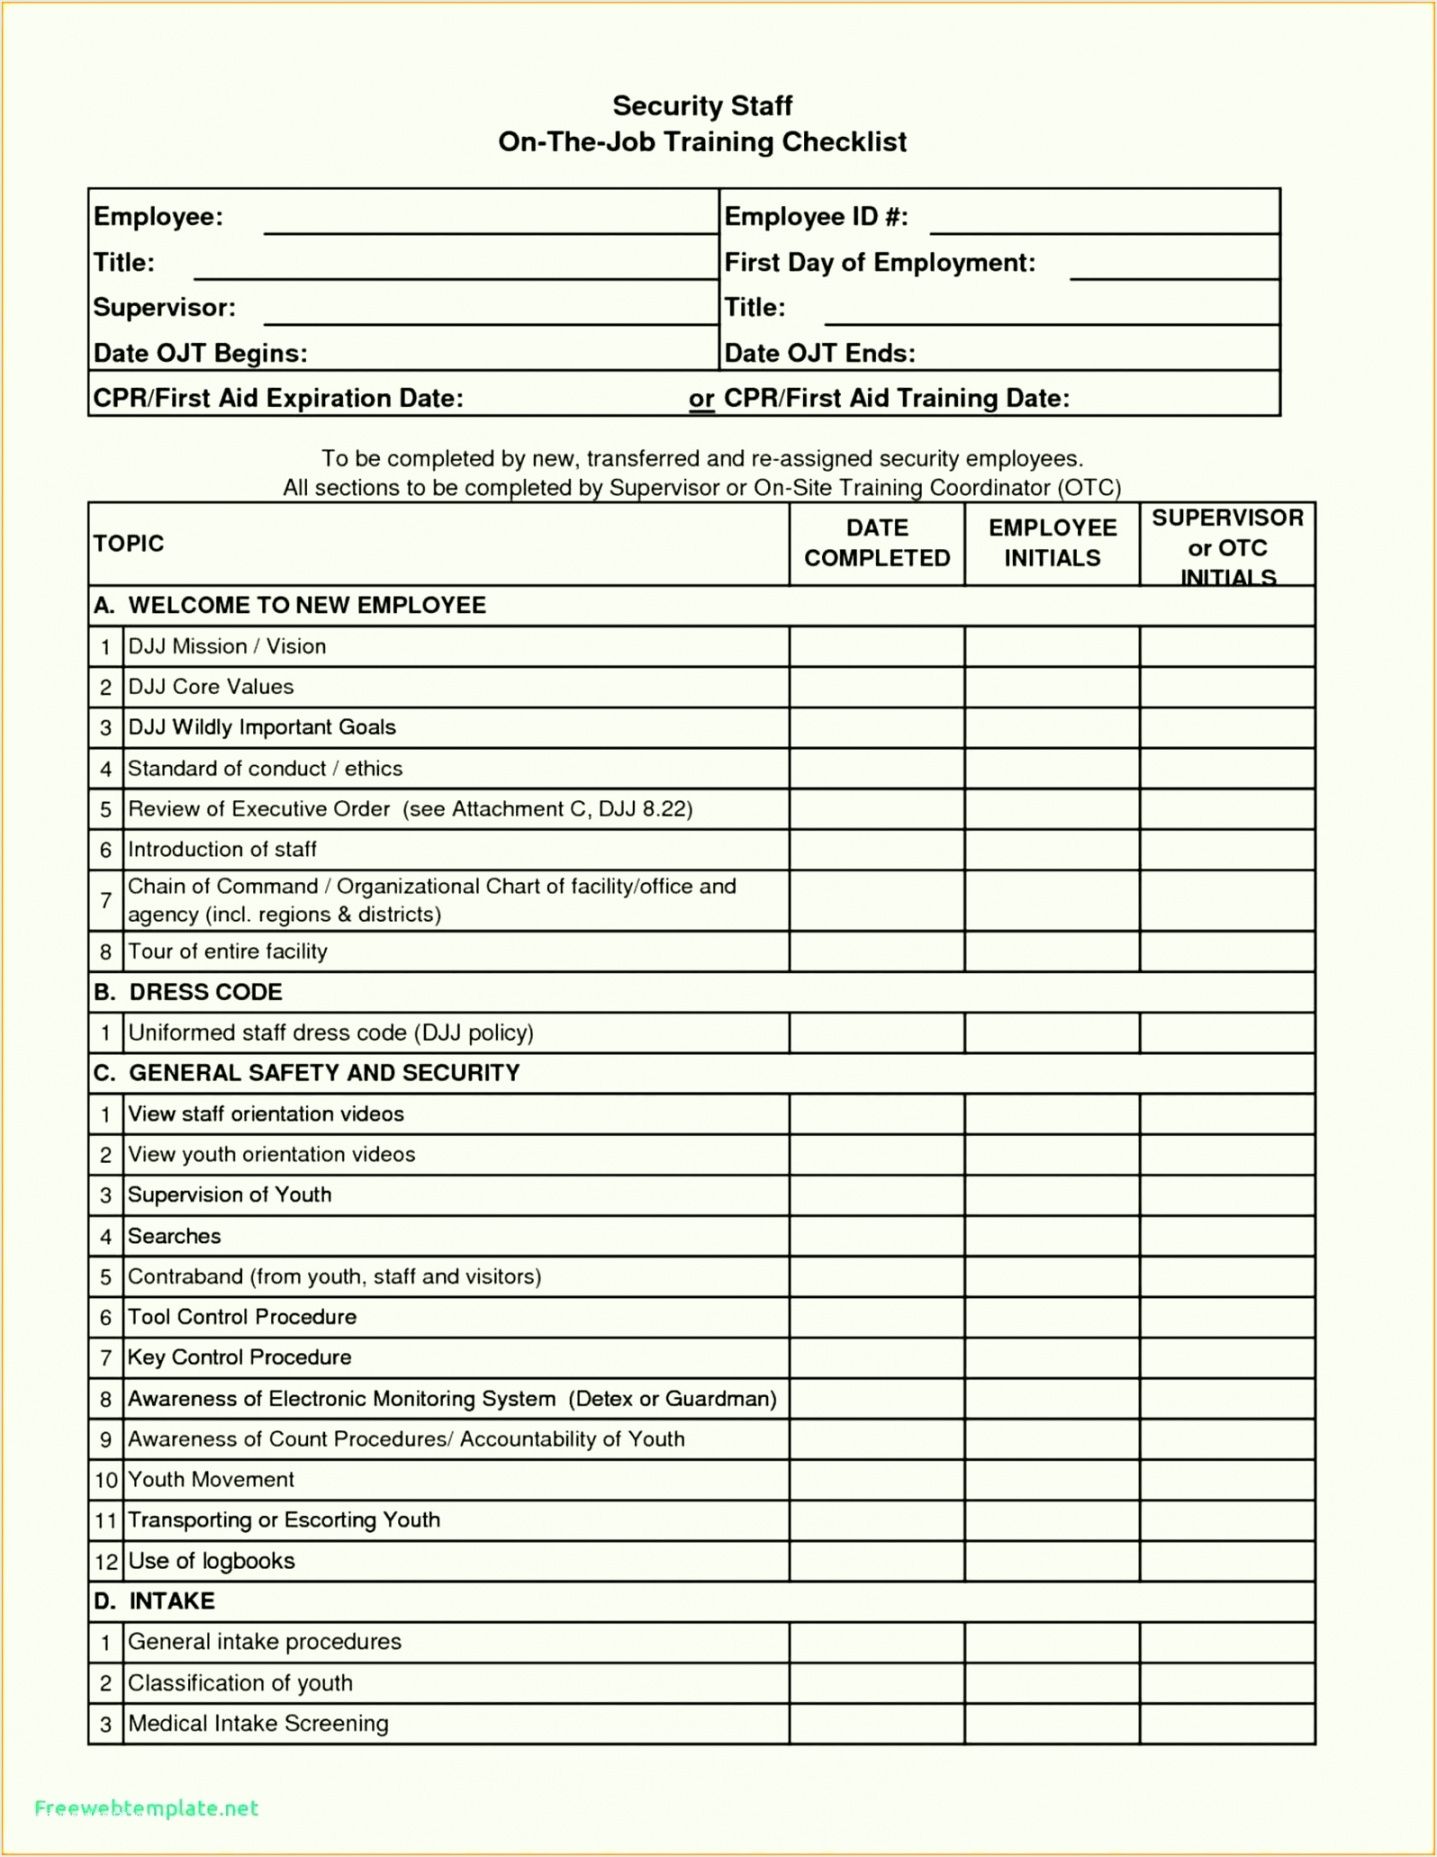 printable network assessment checklist template  besttemplatess123 security assessment checklist template samples